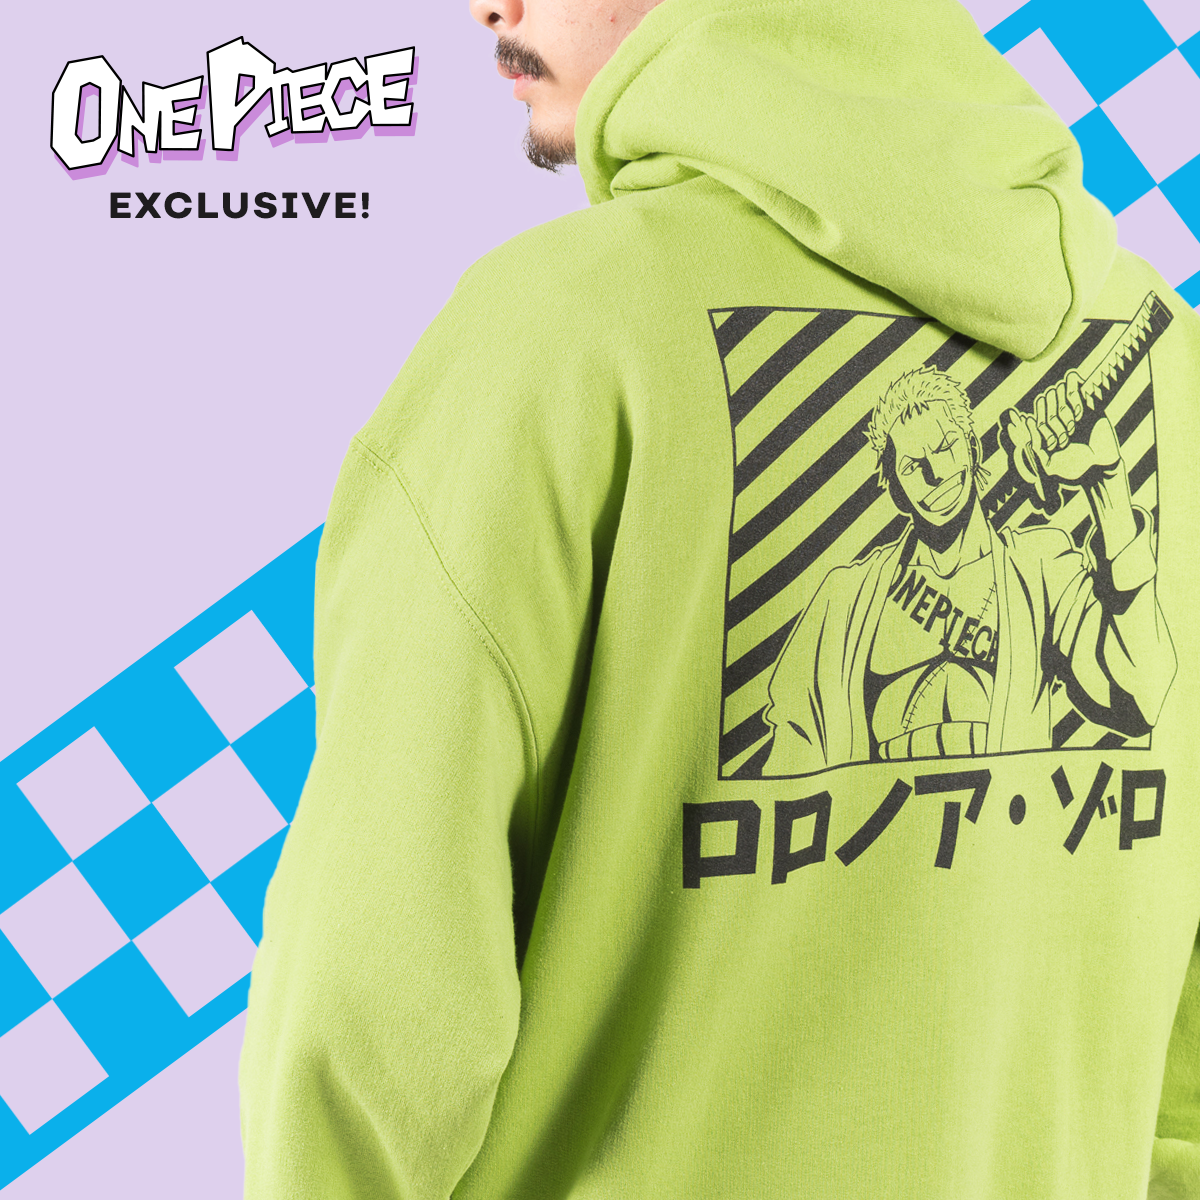 One Piece - Zoro Hoodie - Crunchyroll Exclusive! image count 1